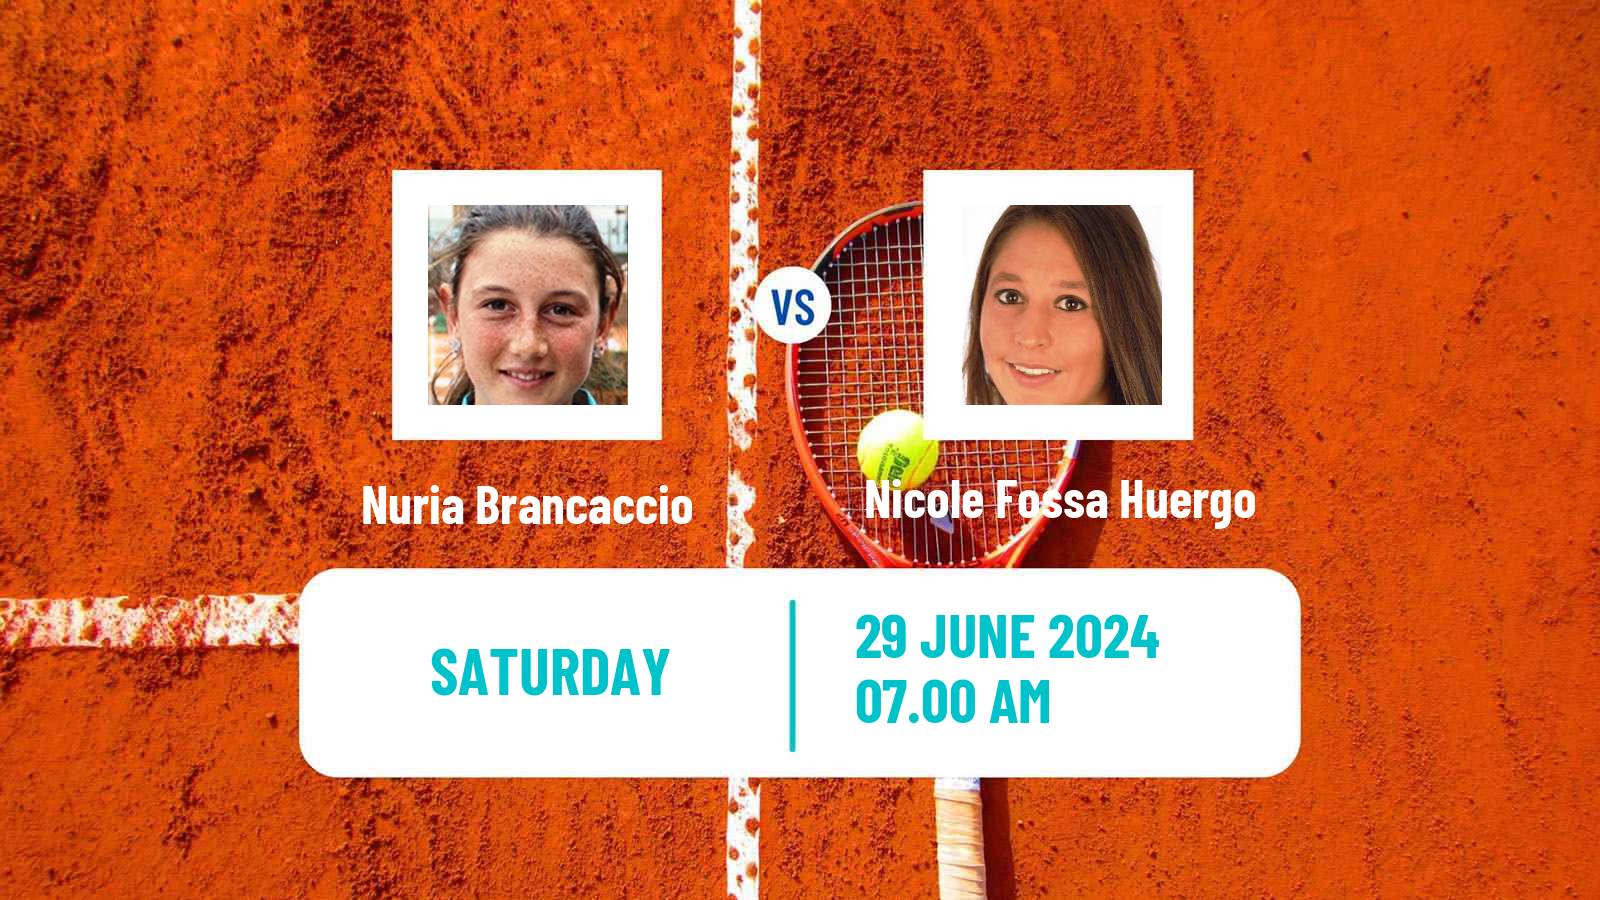 Tennis ITF W35 Tarvisio Women Nuria Brancaccio - Nicole Fossa Huergo